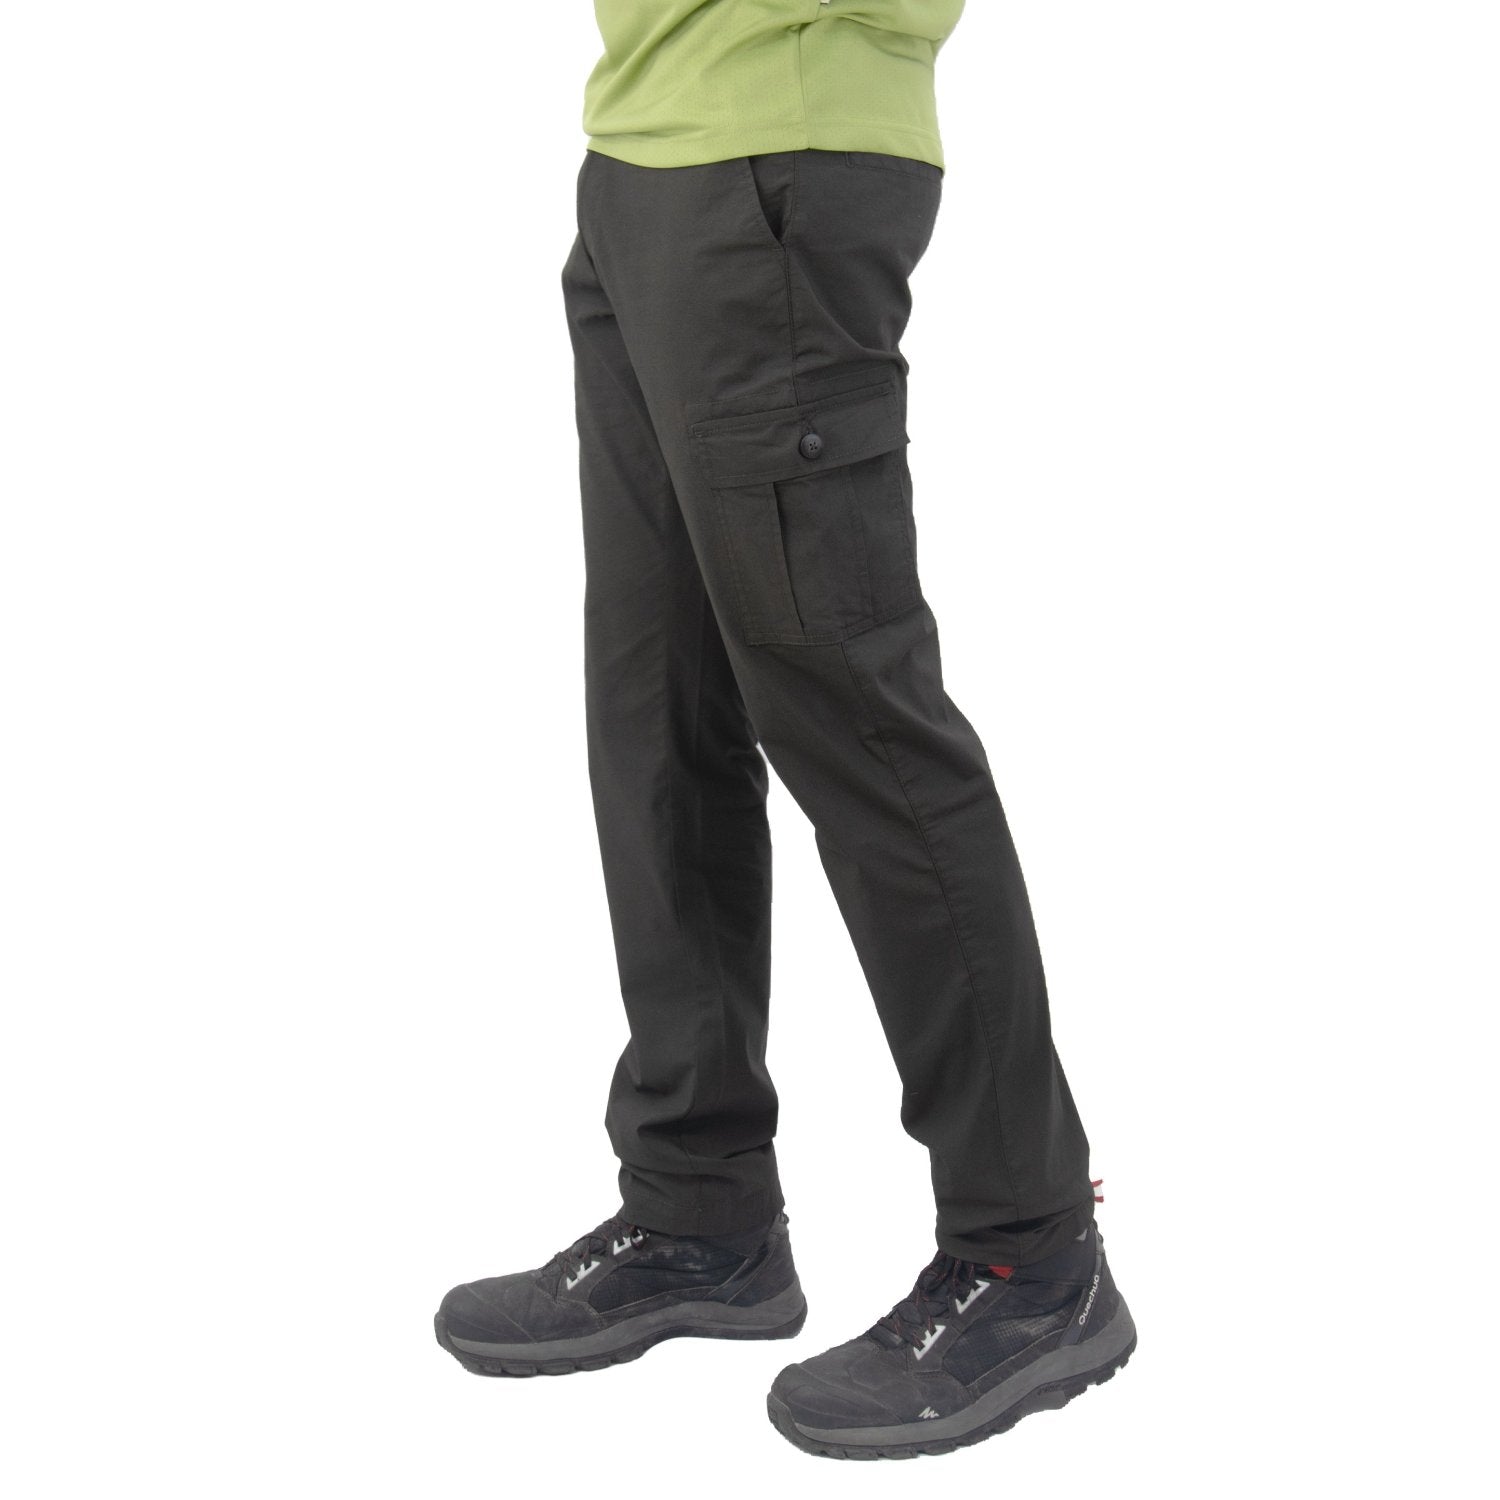 Buy Gokyo Corbett Cargo Pants Stretch | Trekking & Hiking Pants at Gokyo Outdoor Clothing & Gear